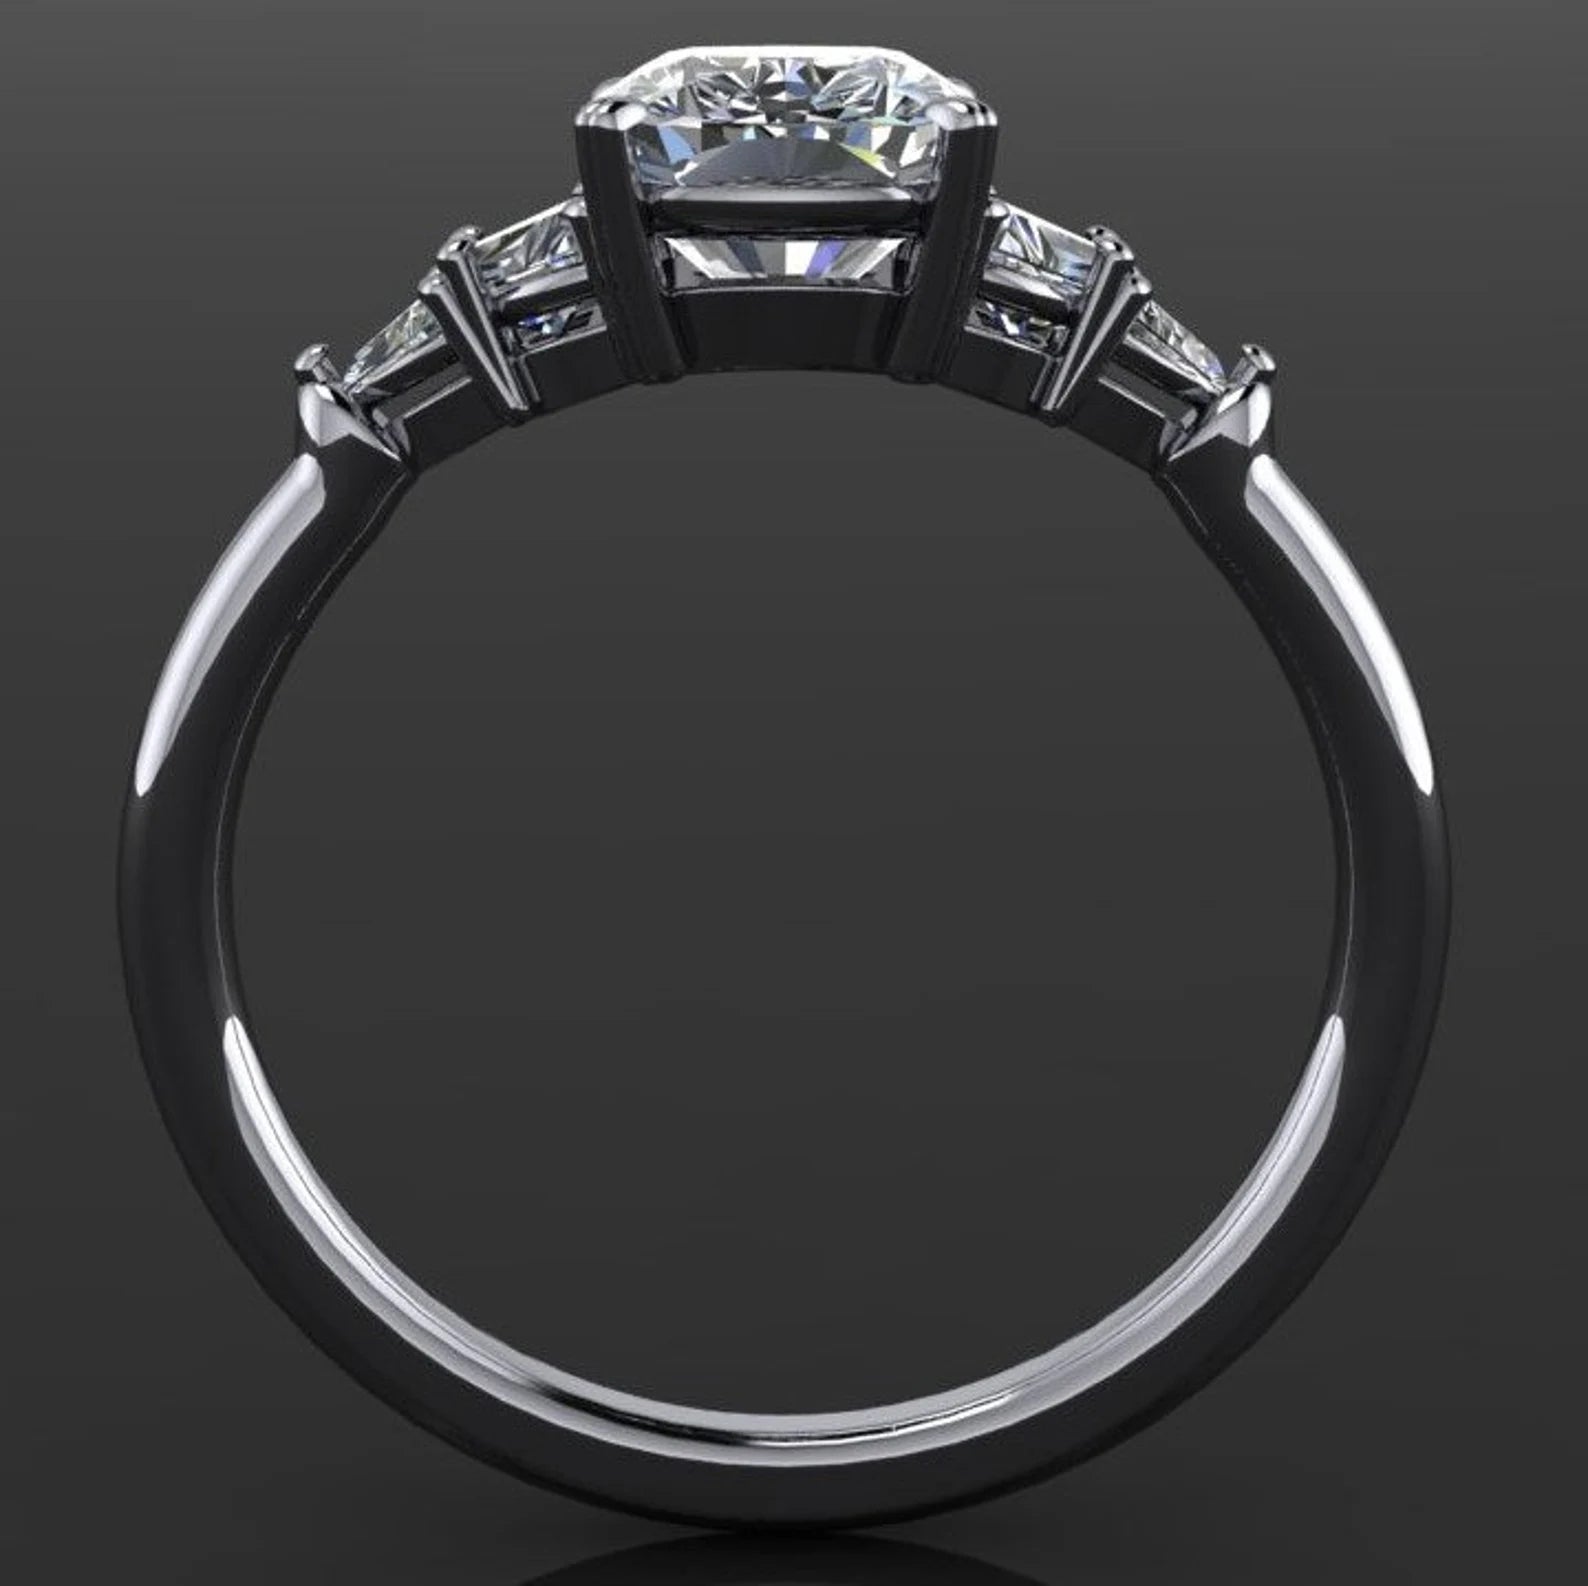 jazz ring - 2 carat cushion cut moissanite engagement ring, 5 stone ring - J Hollywood Designs